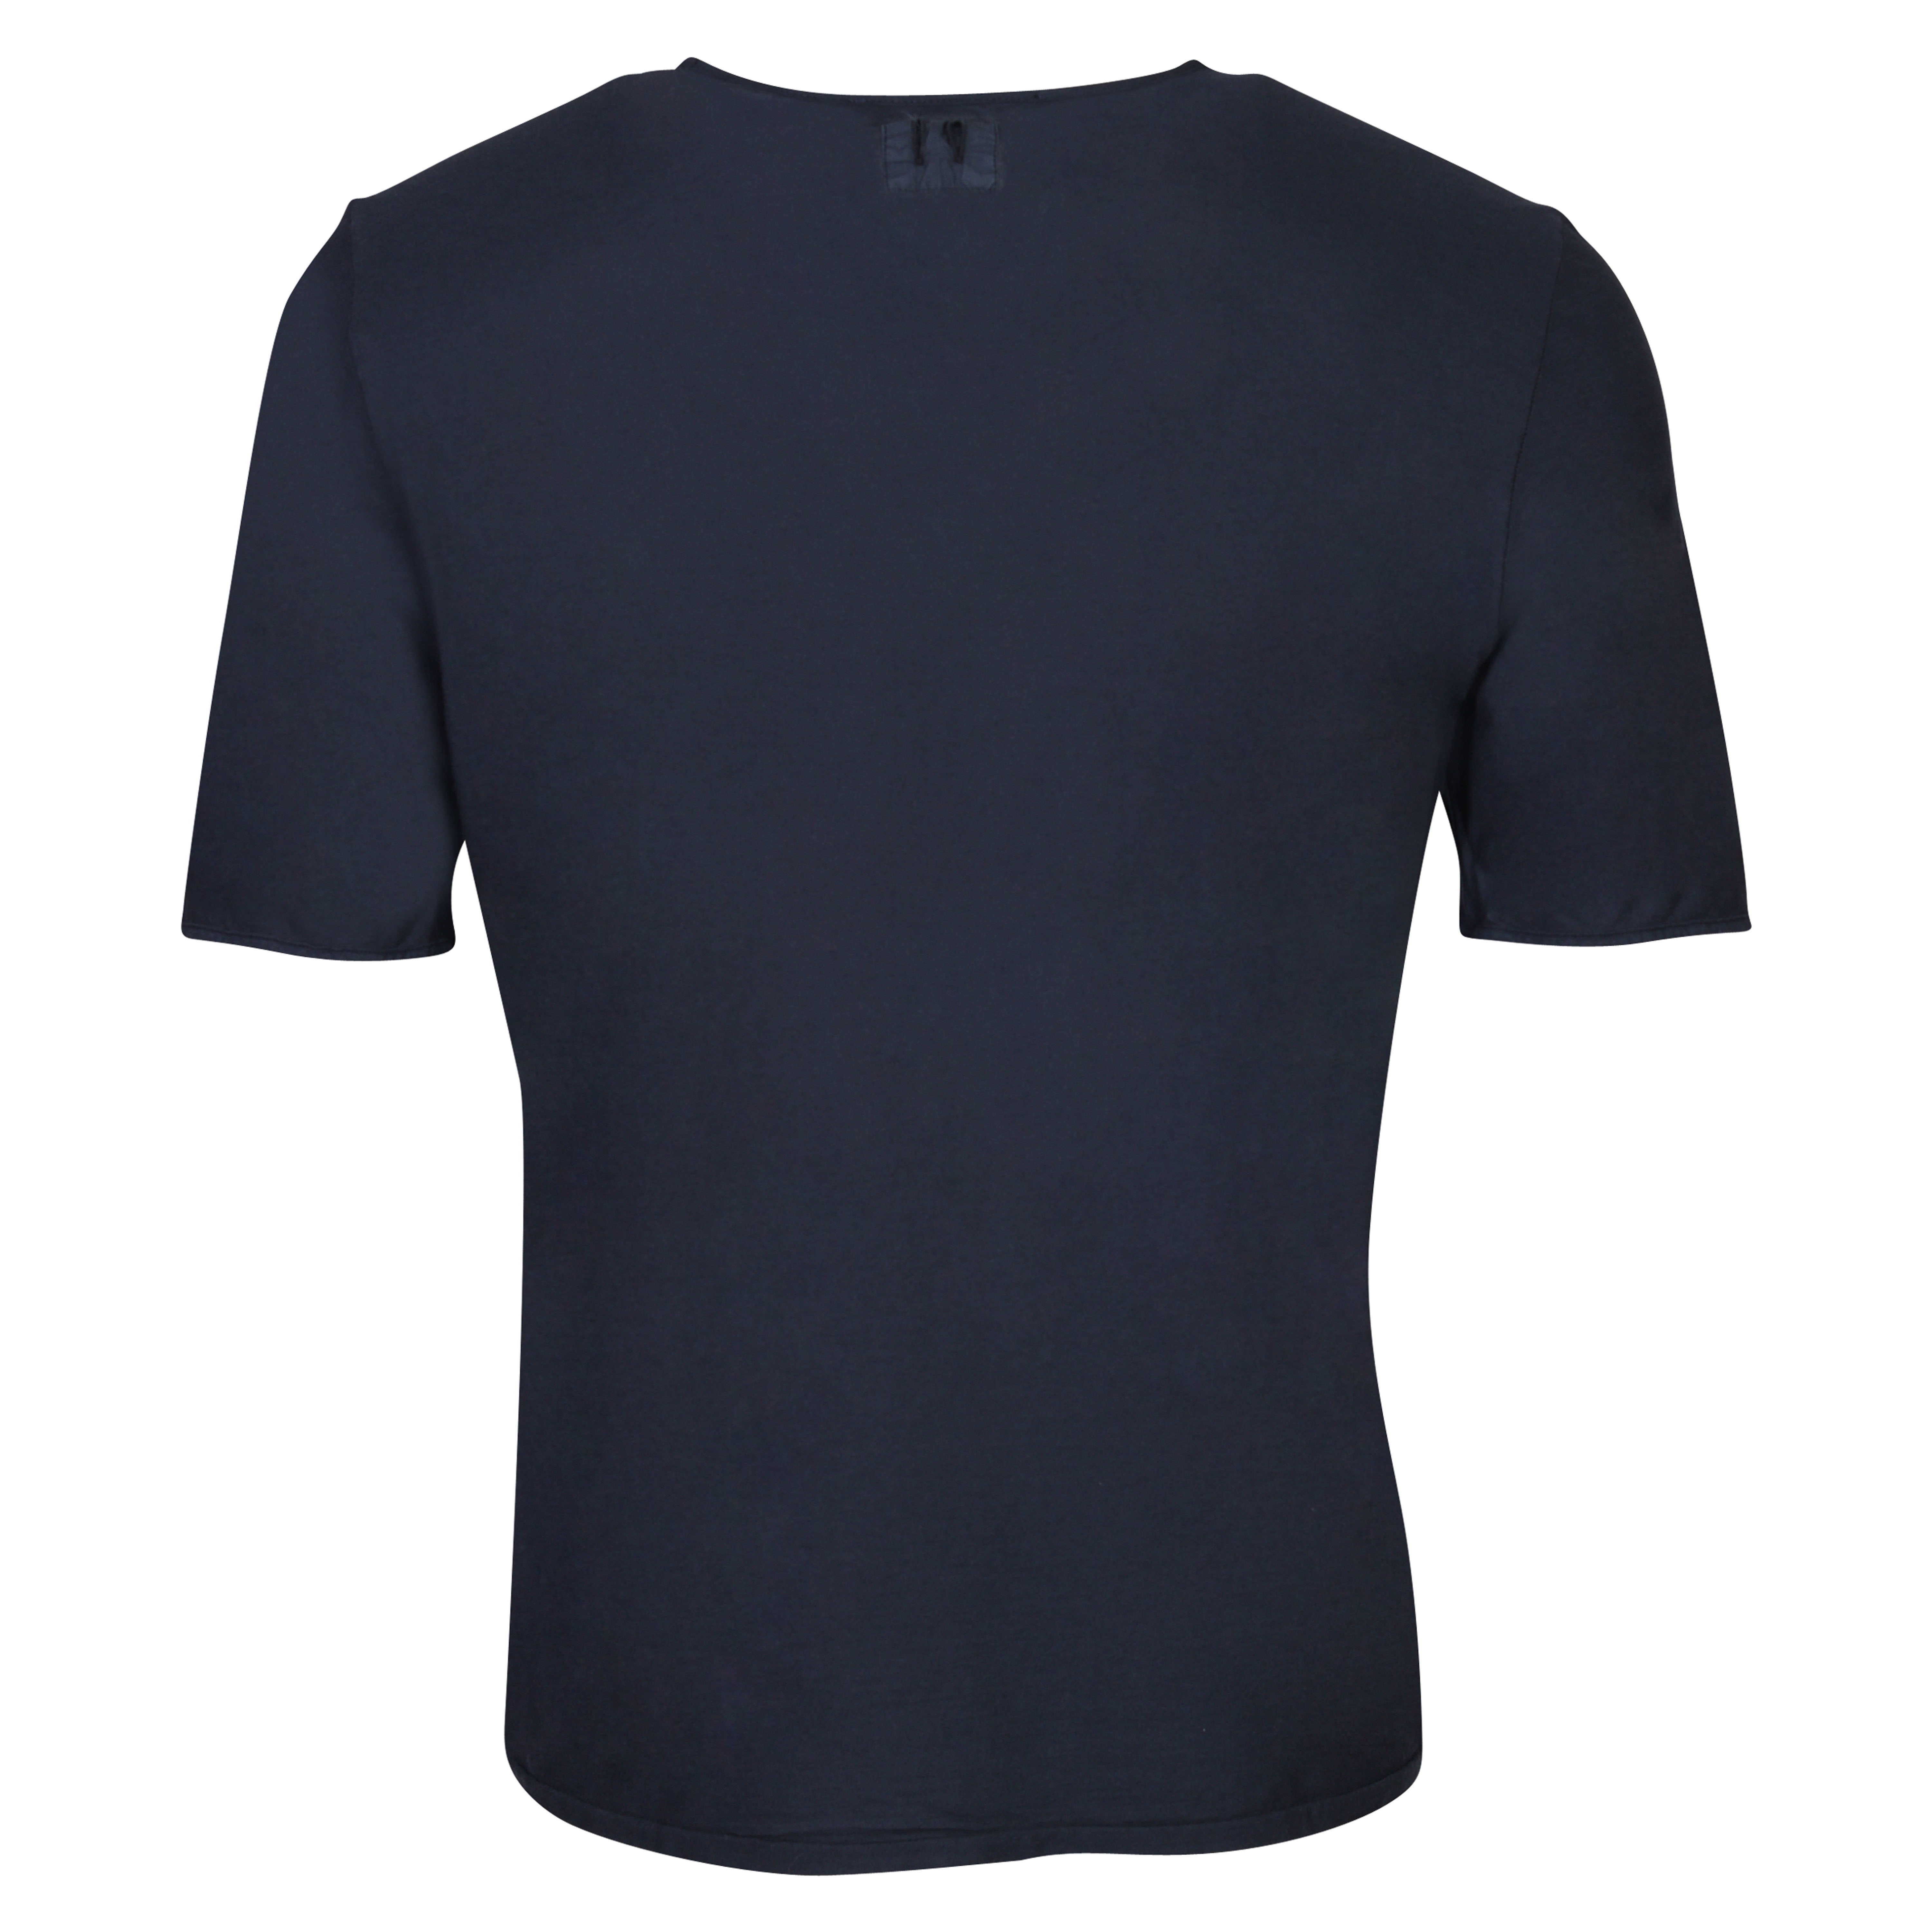 Hannes Roether V-Neck T-Shirt in Dark Navy 3XL